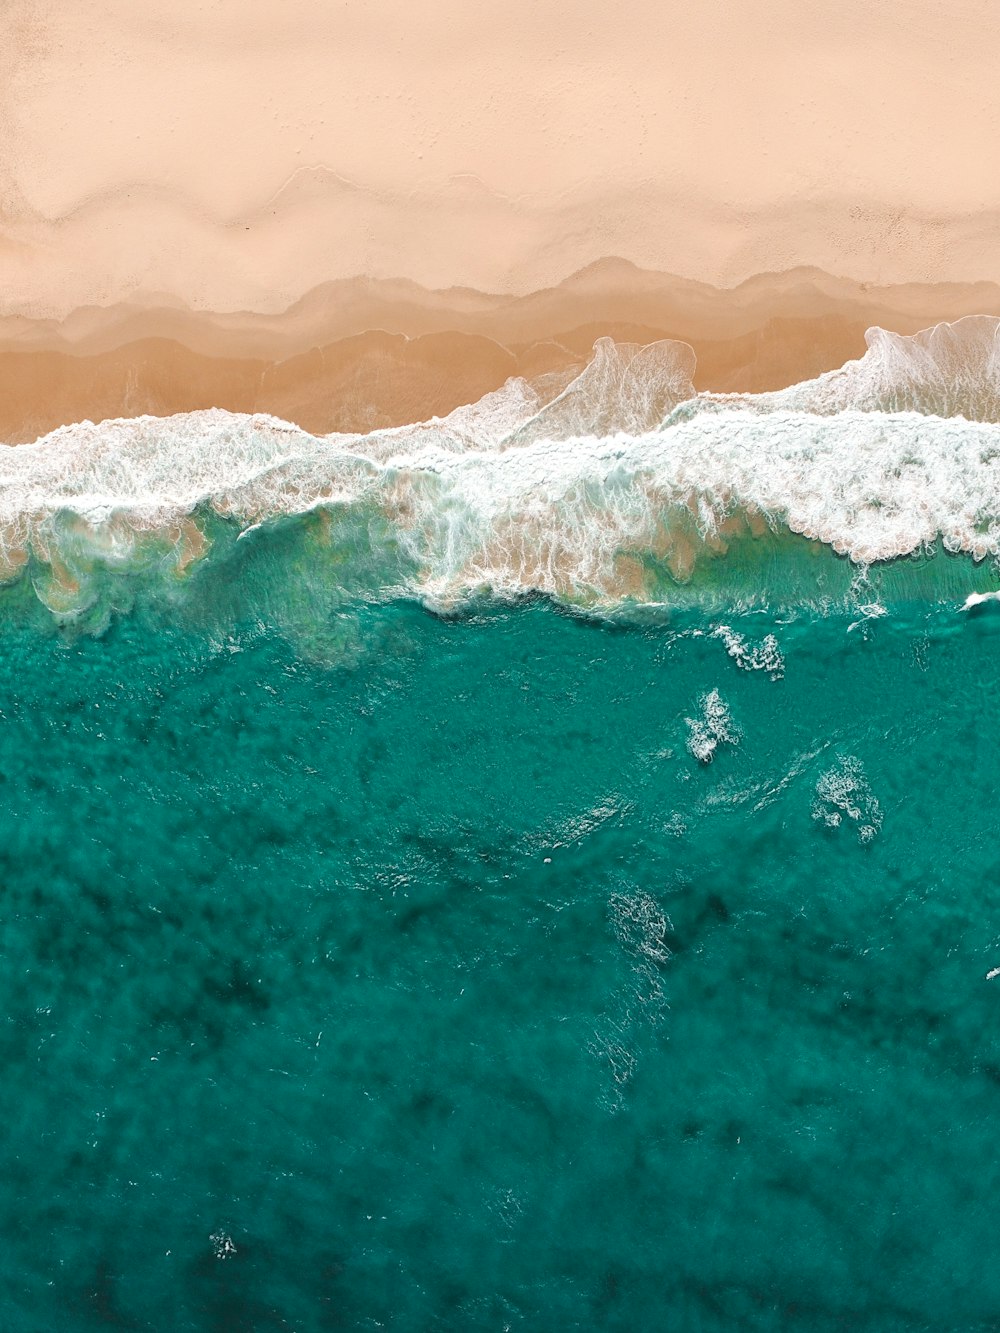 Iphone Wallpaper Photo Free Ocean Image On Unsplash